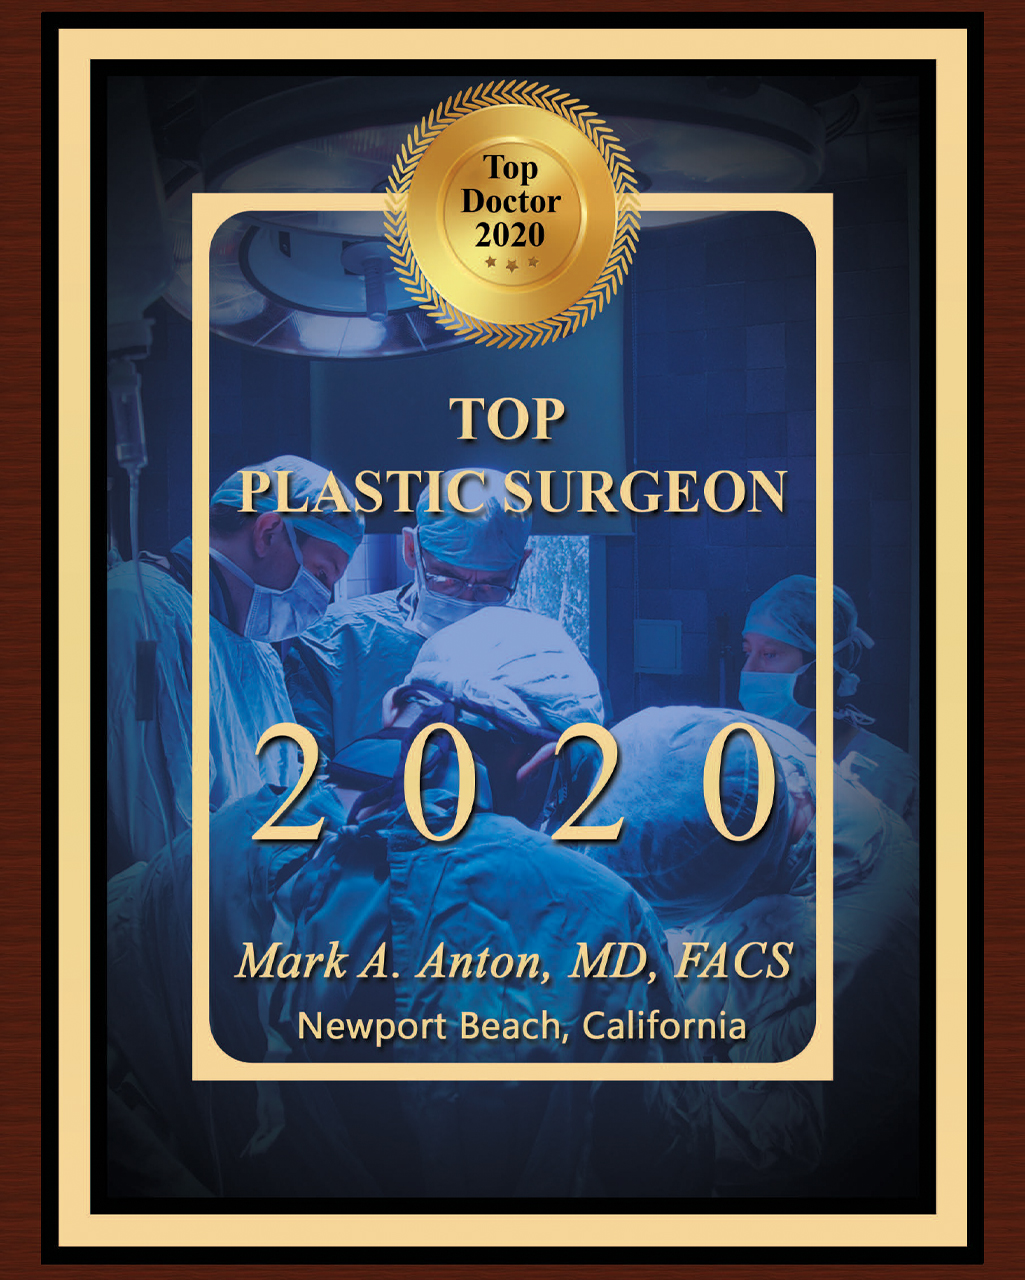 Top Plastic Surgeon 2020